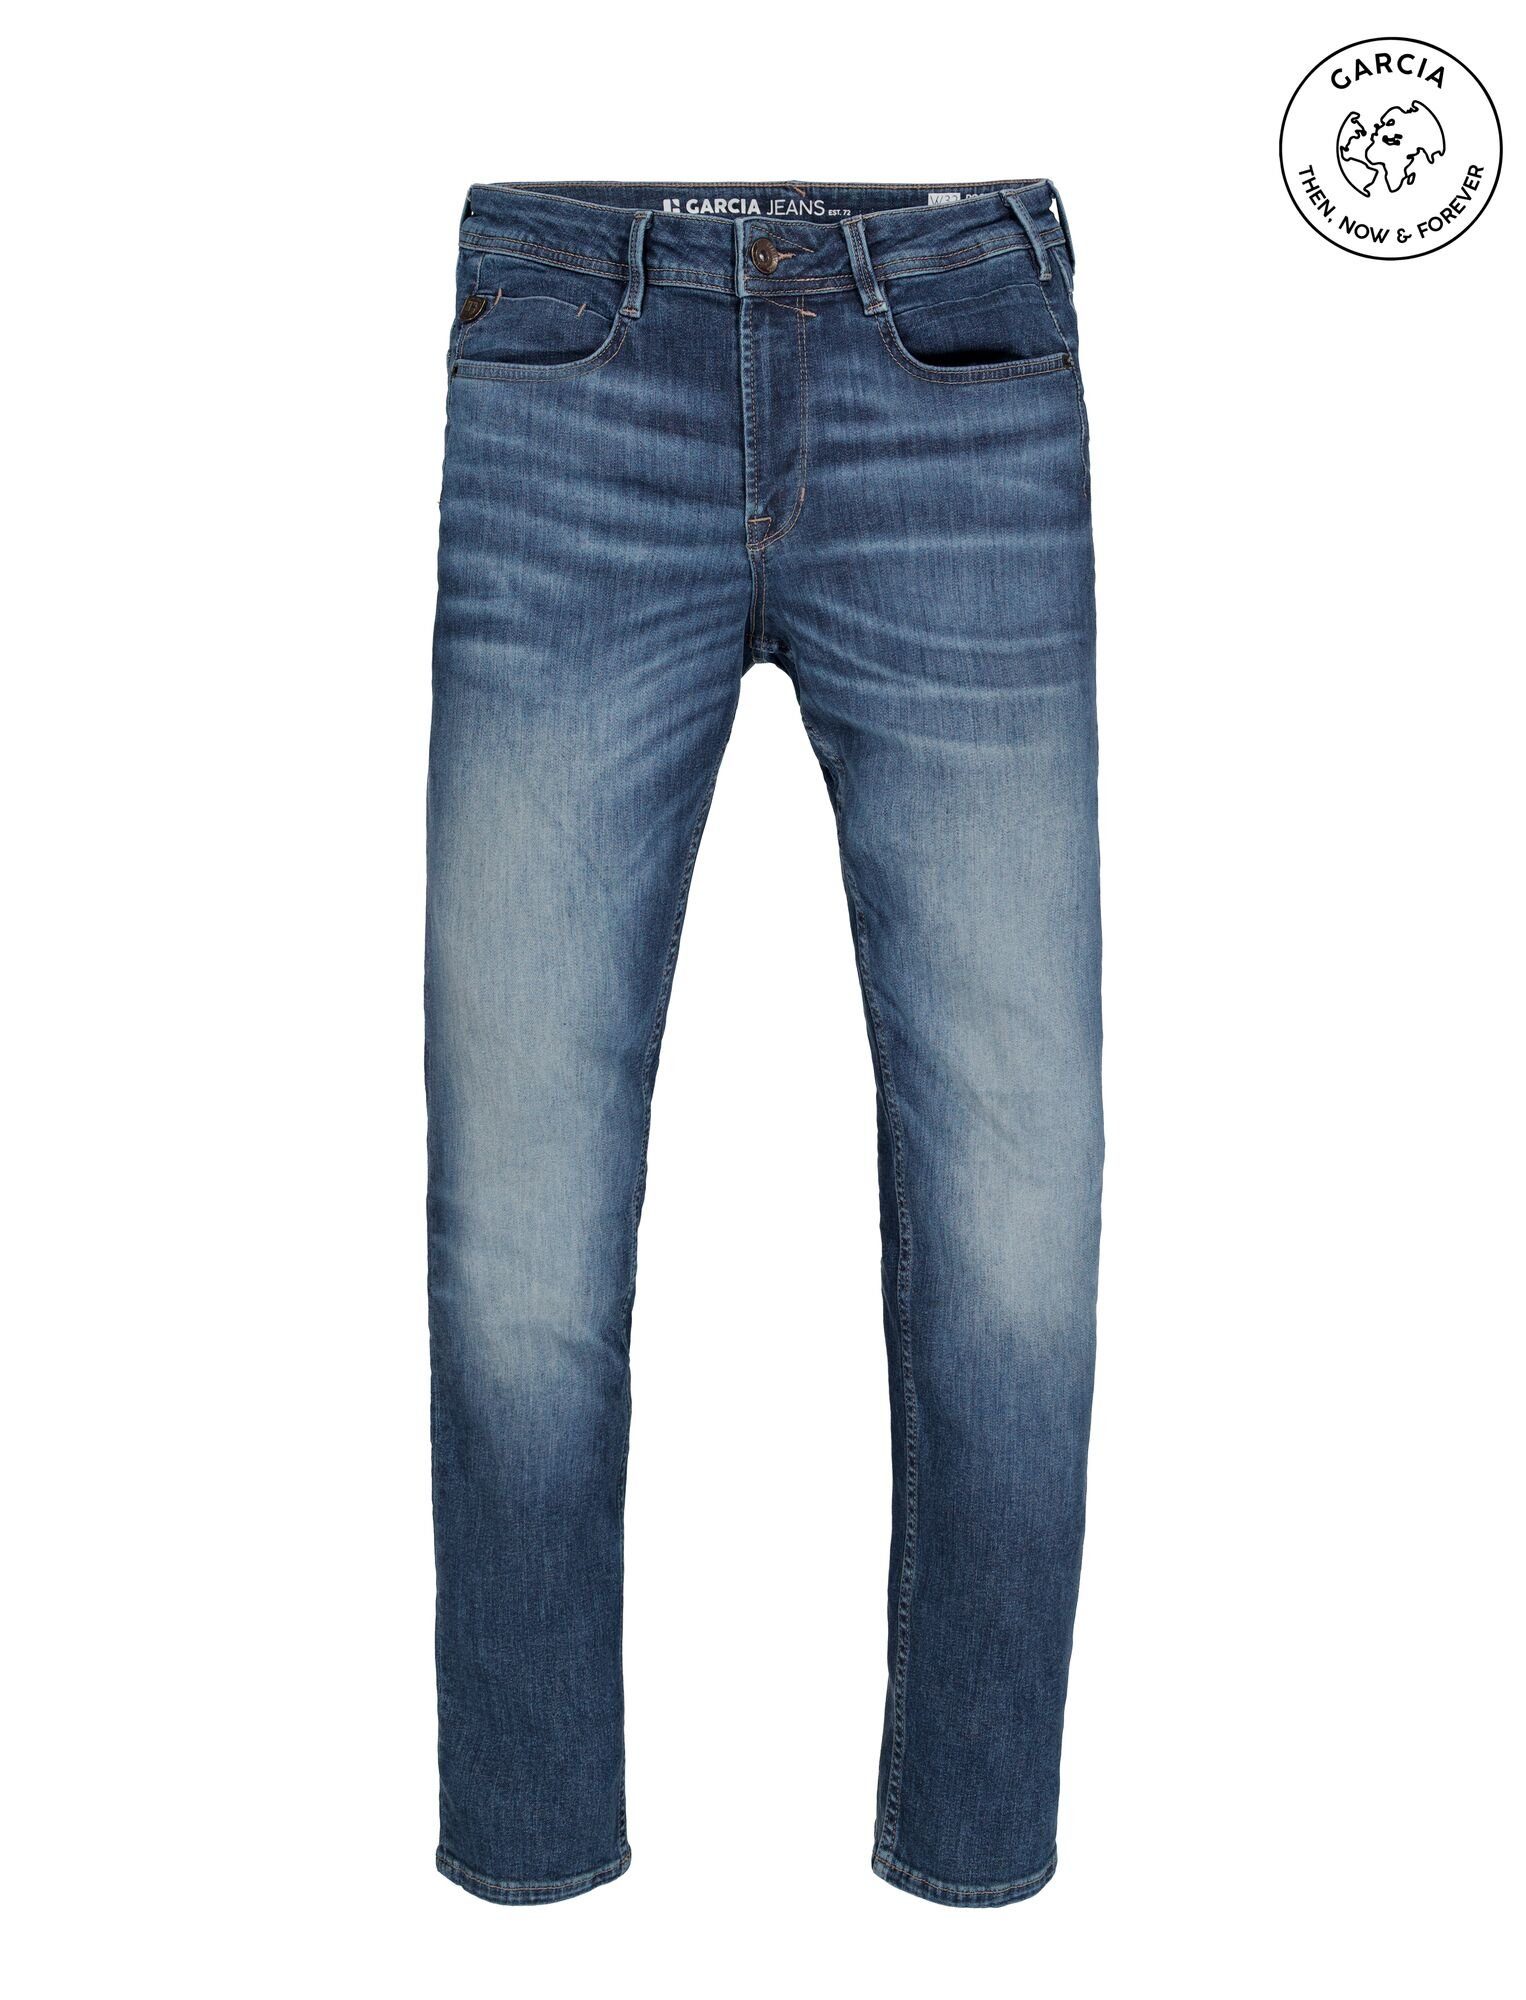 GARCIA JEANS 5-Pocket-Jeans GARCIA ROCKO dark blue medium used 690.8660 - | Slim-Fit Jeans